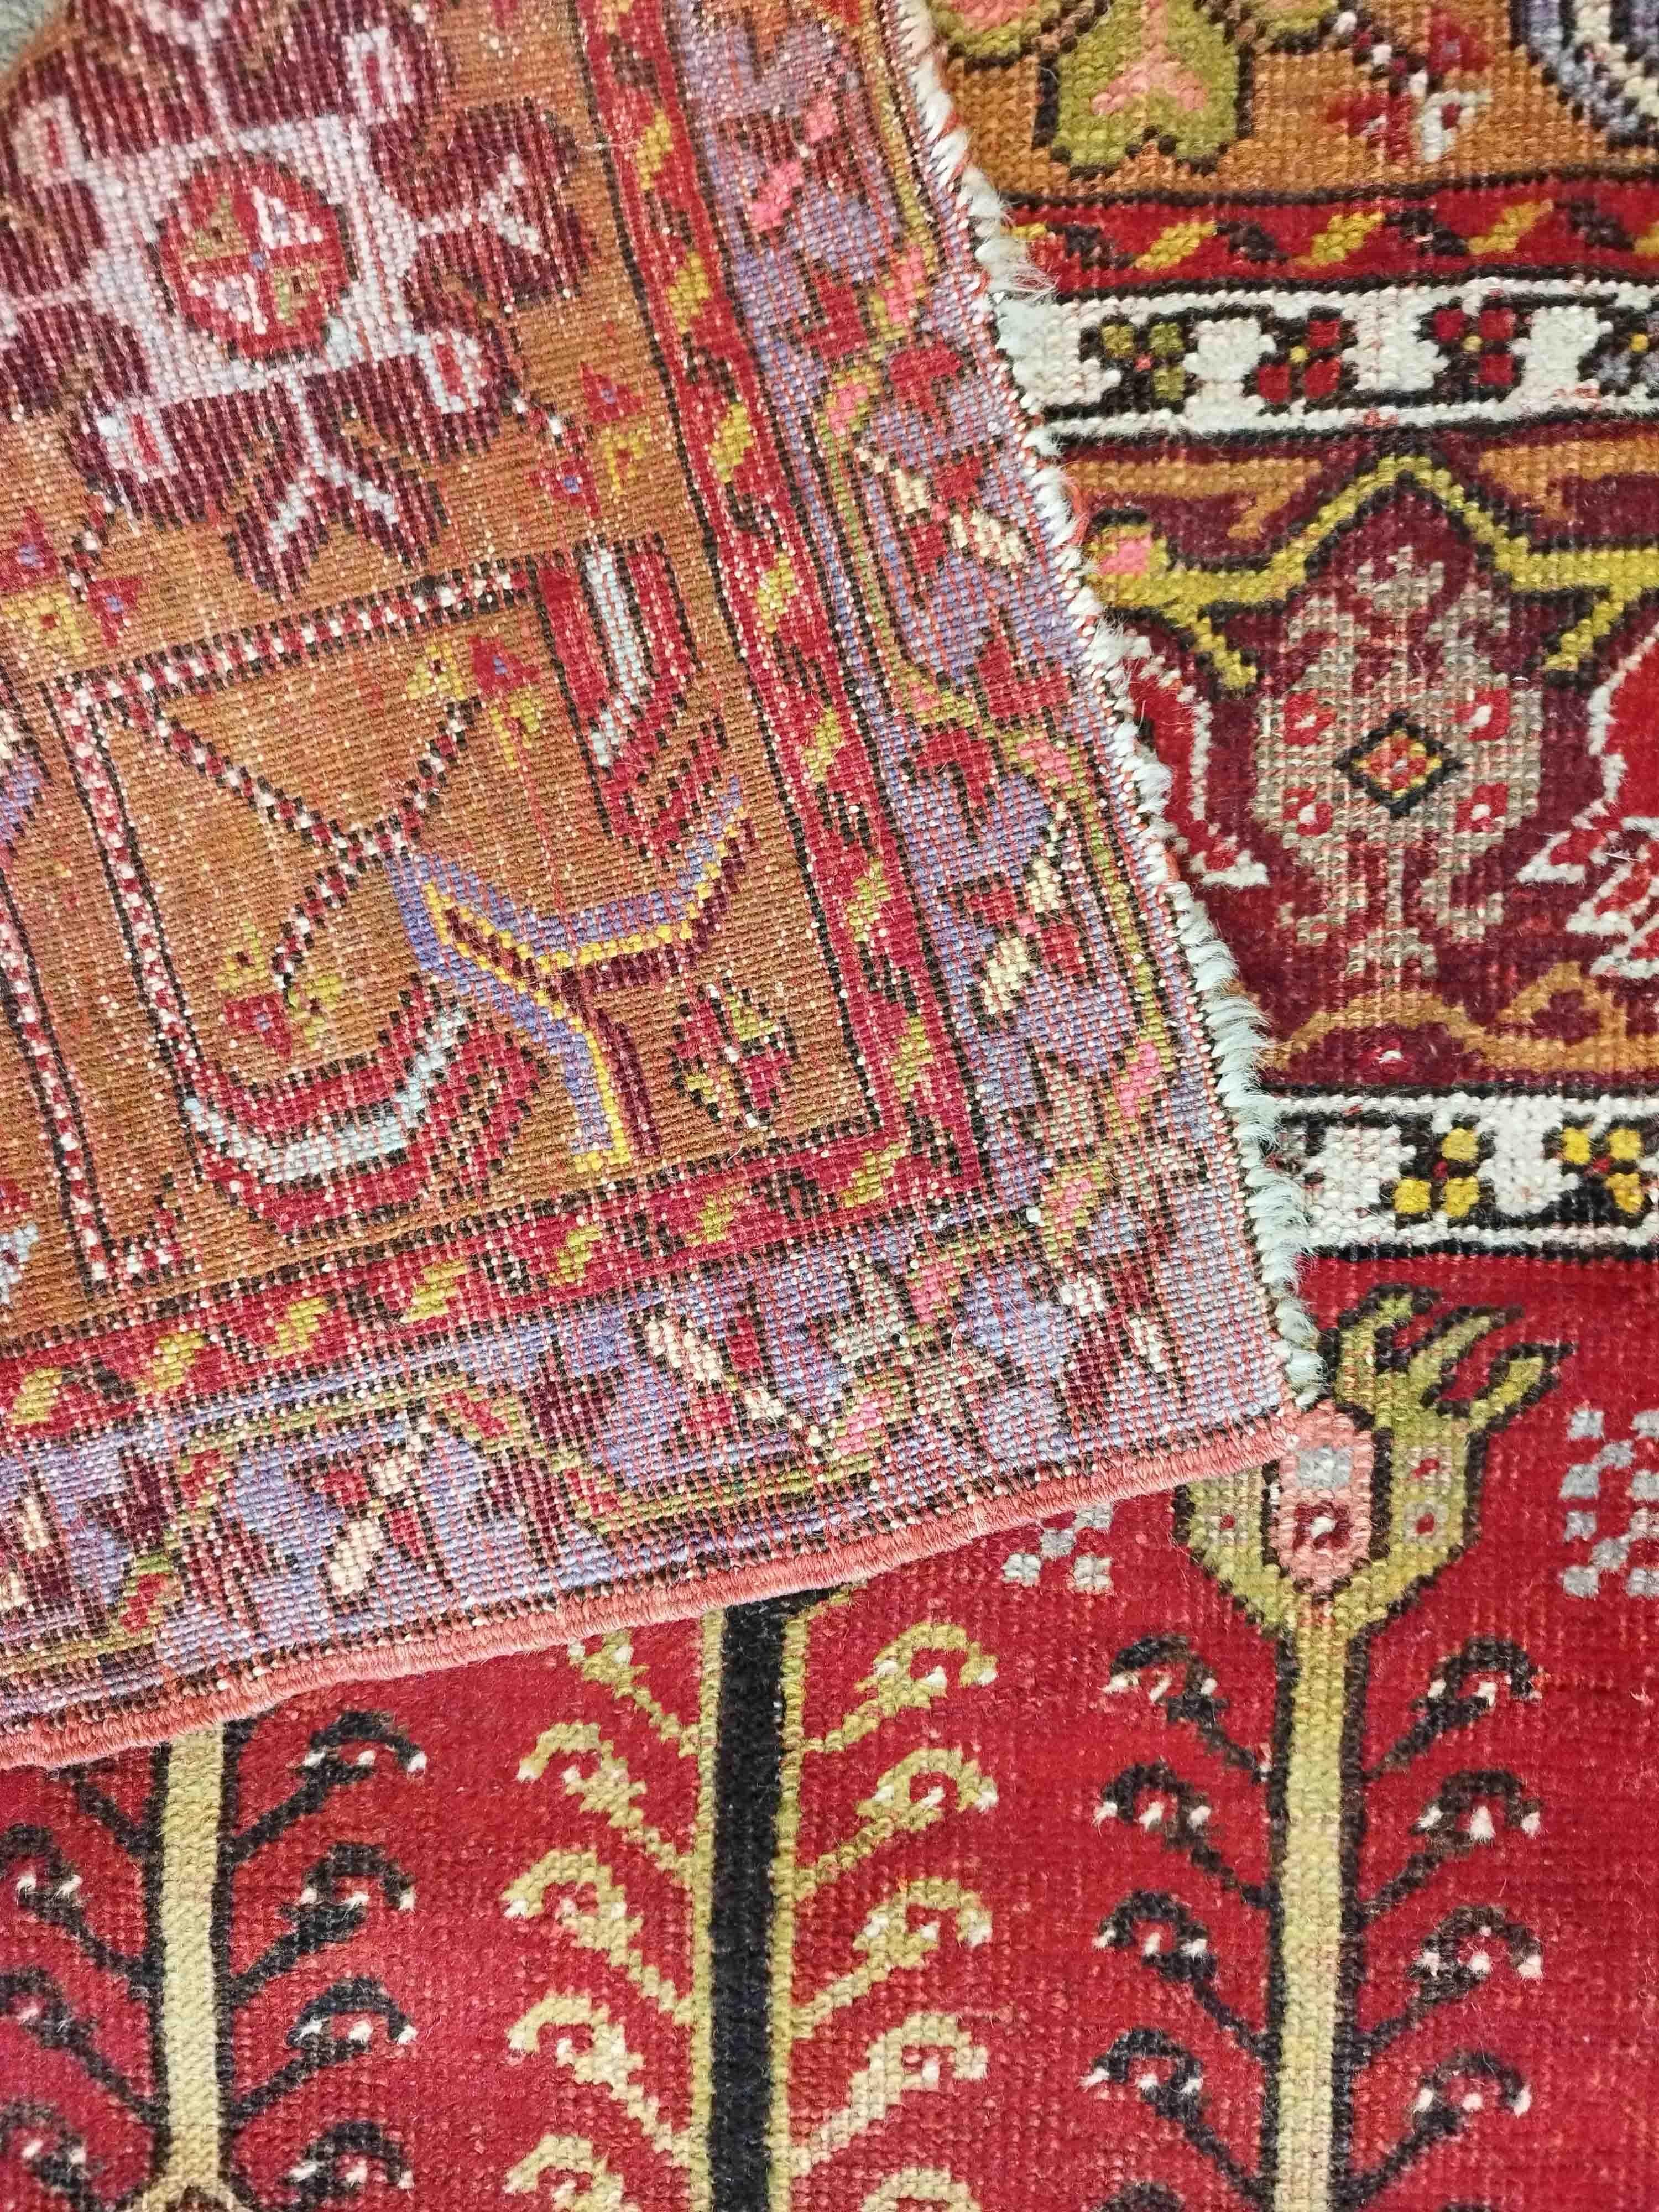  Kirchir Turkish Carpet, 19th Century - N° 728 For Sale 1